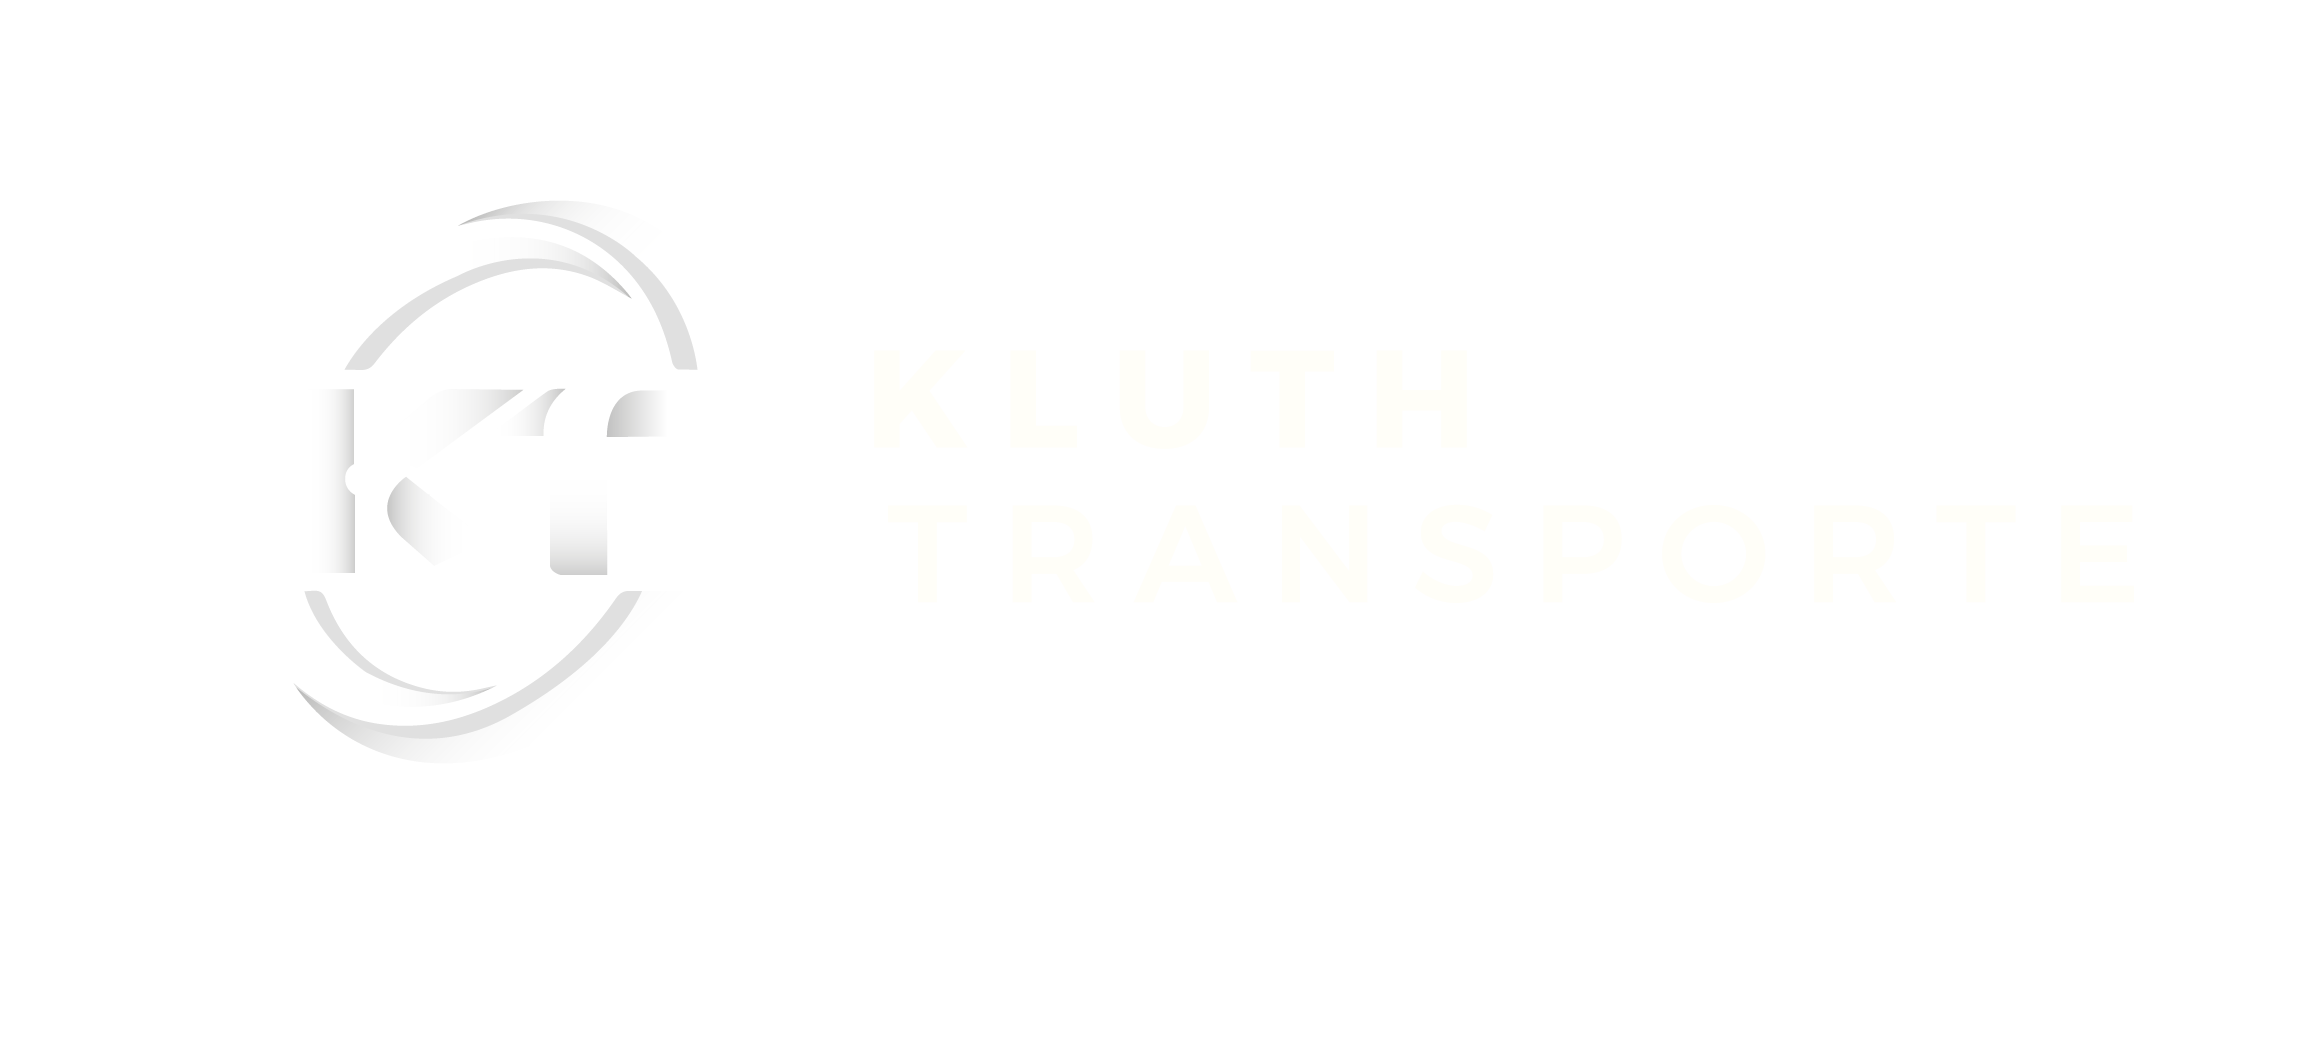 Kluth Transporte GmbH Co. KG